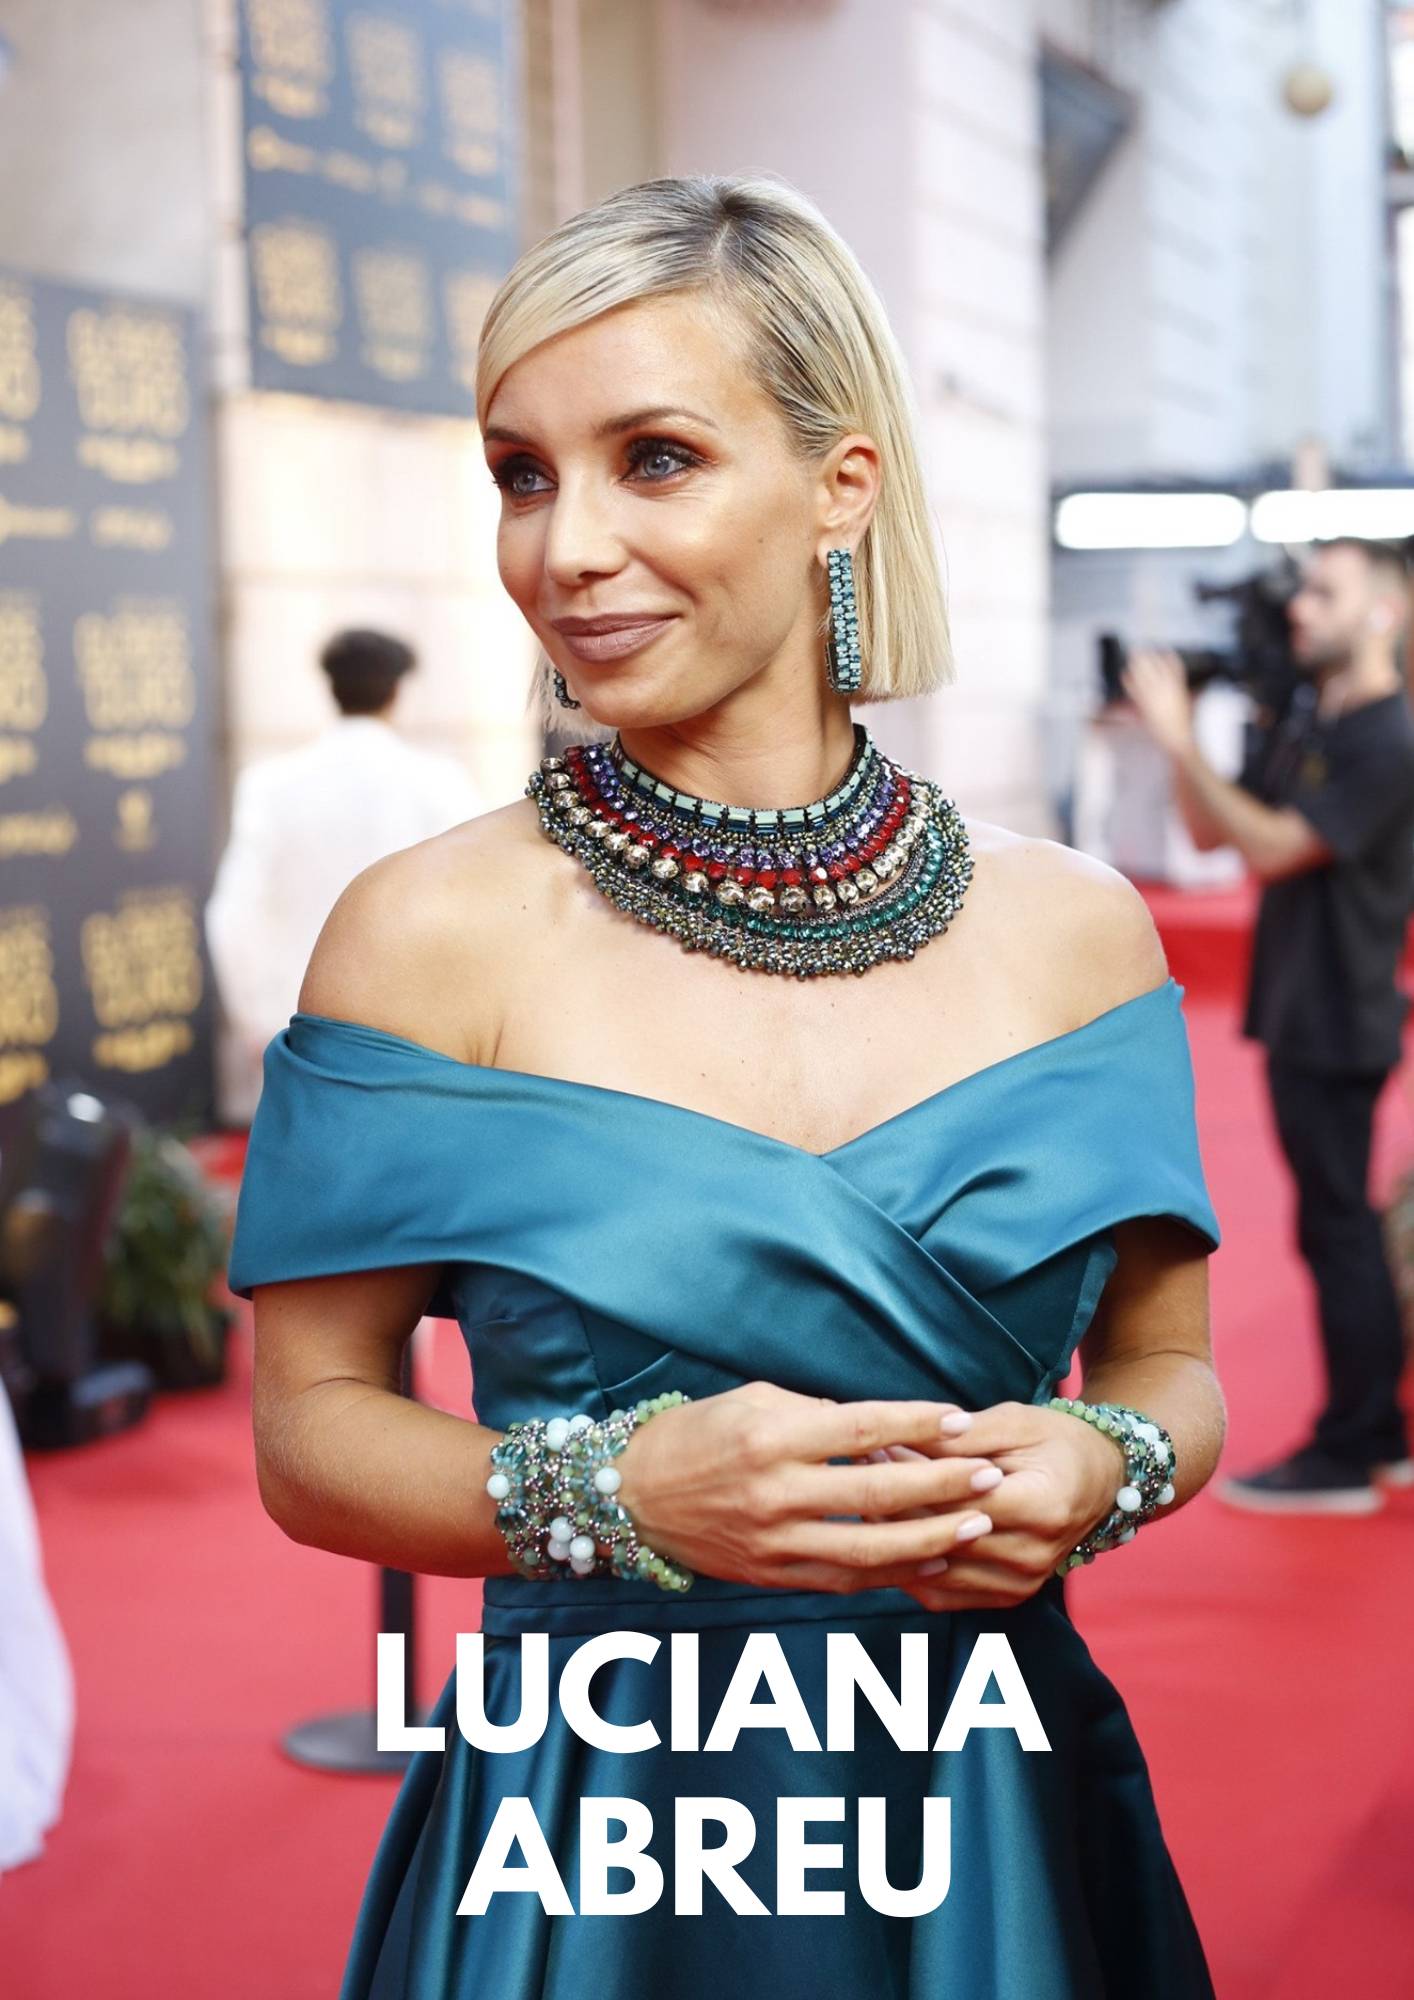 Portuguese presenter Luciana Abreu at the SIC Golden Globes in a custom-made luxury blue dress by MAUÎ Official